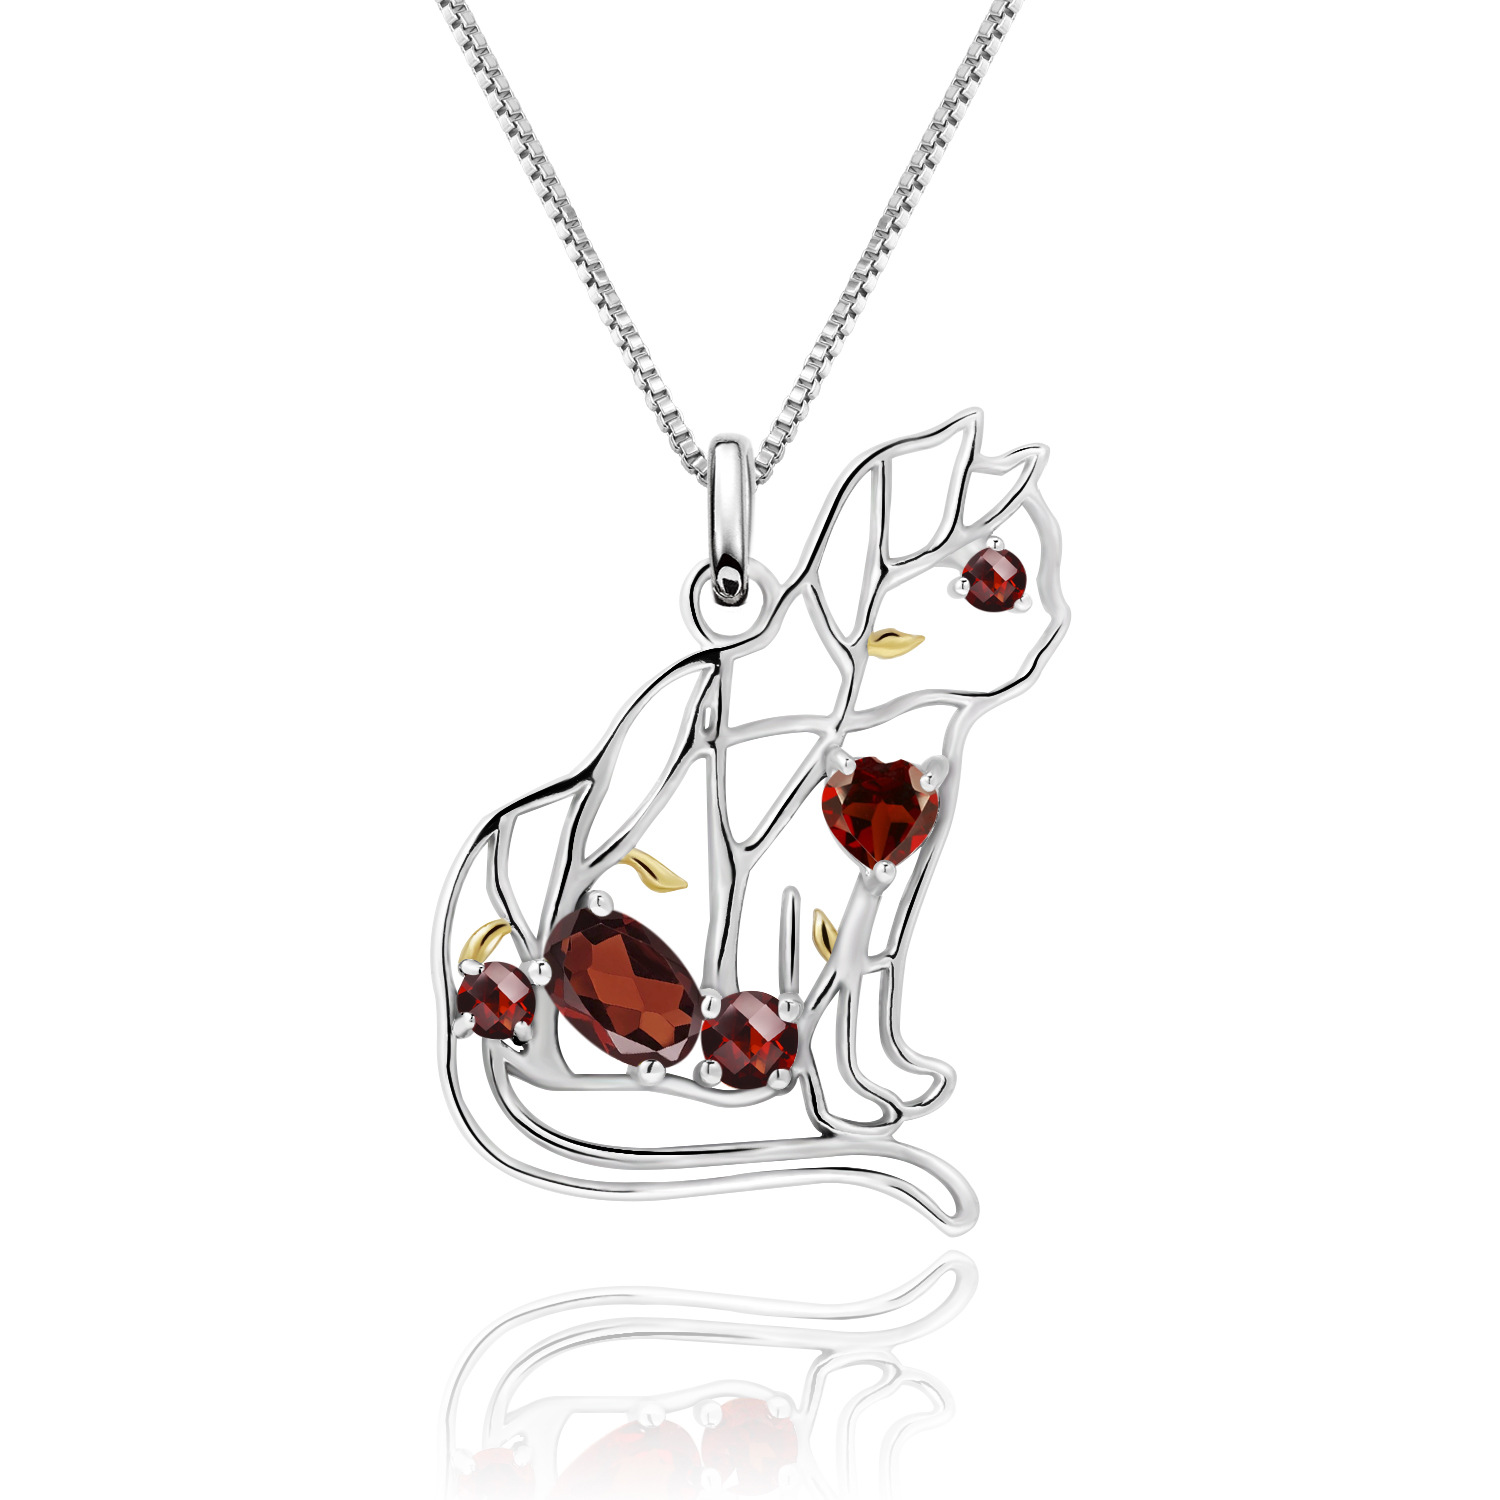 Cat shape inlaid natural colorful gem necklace pendant